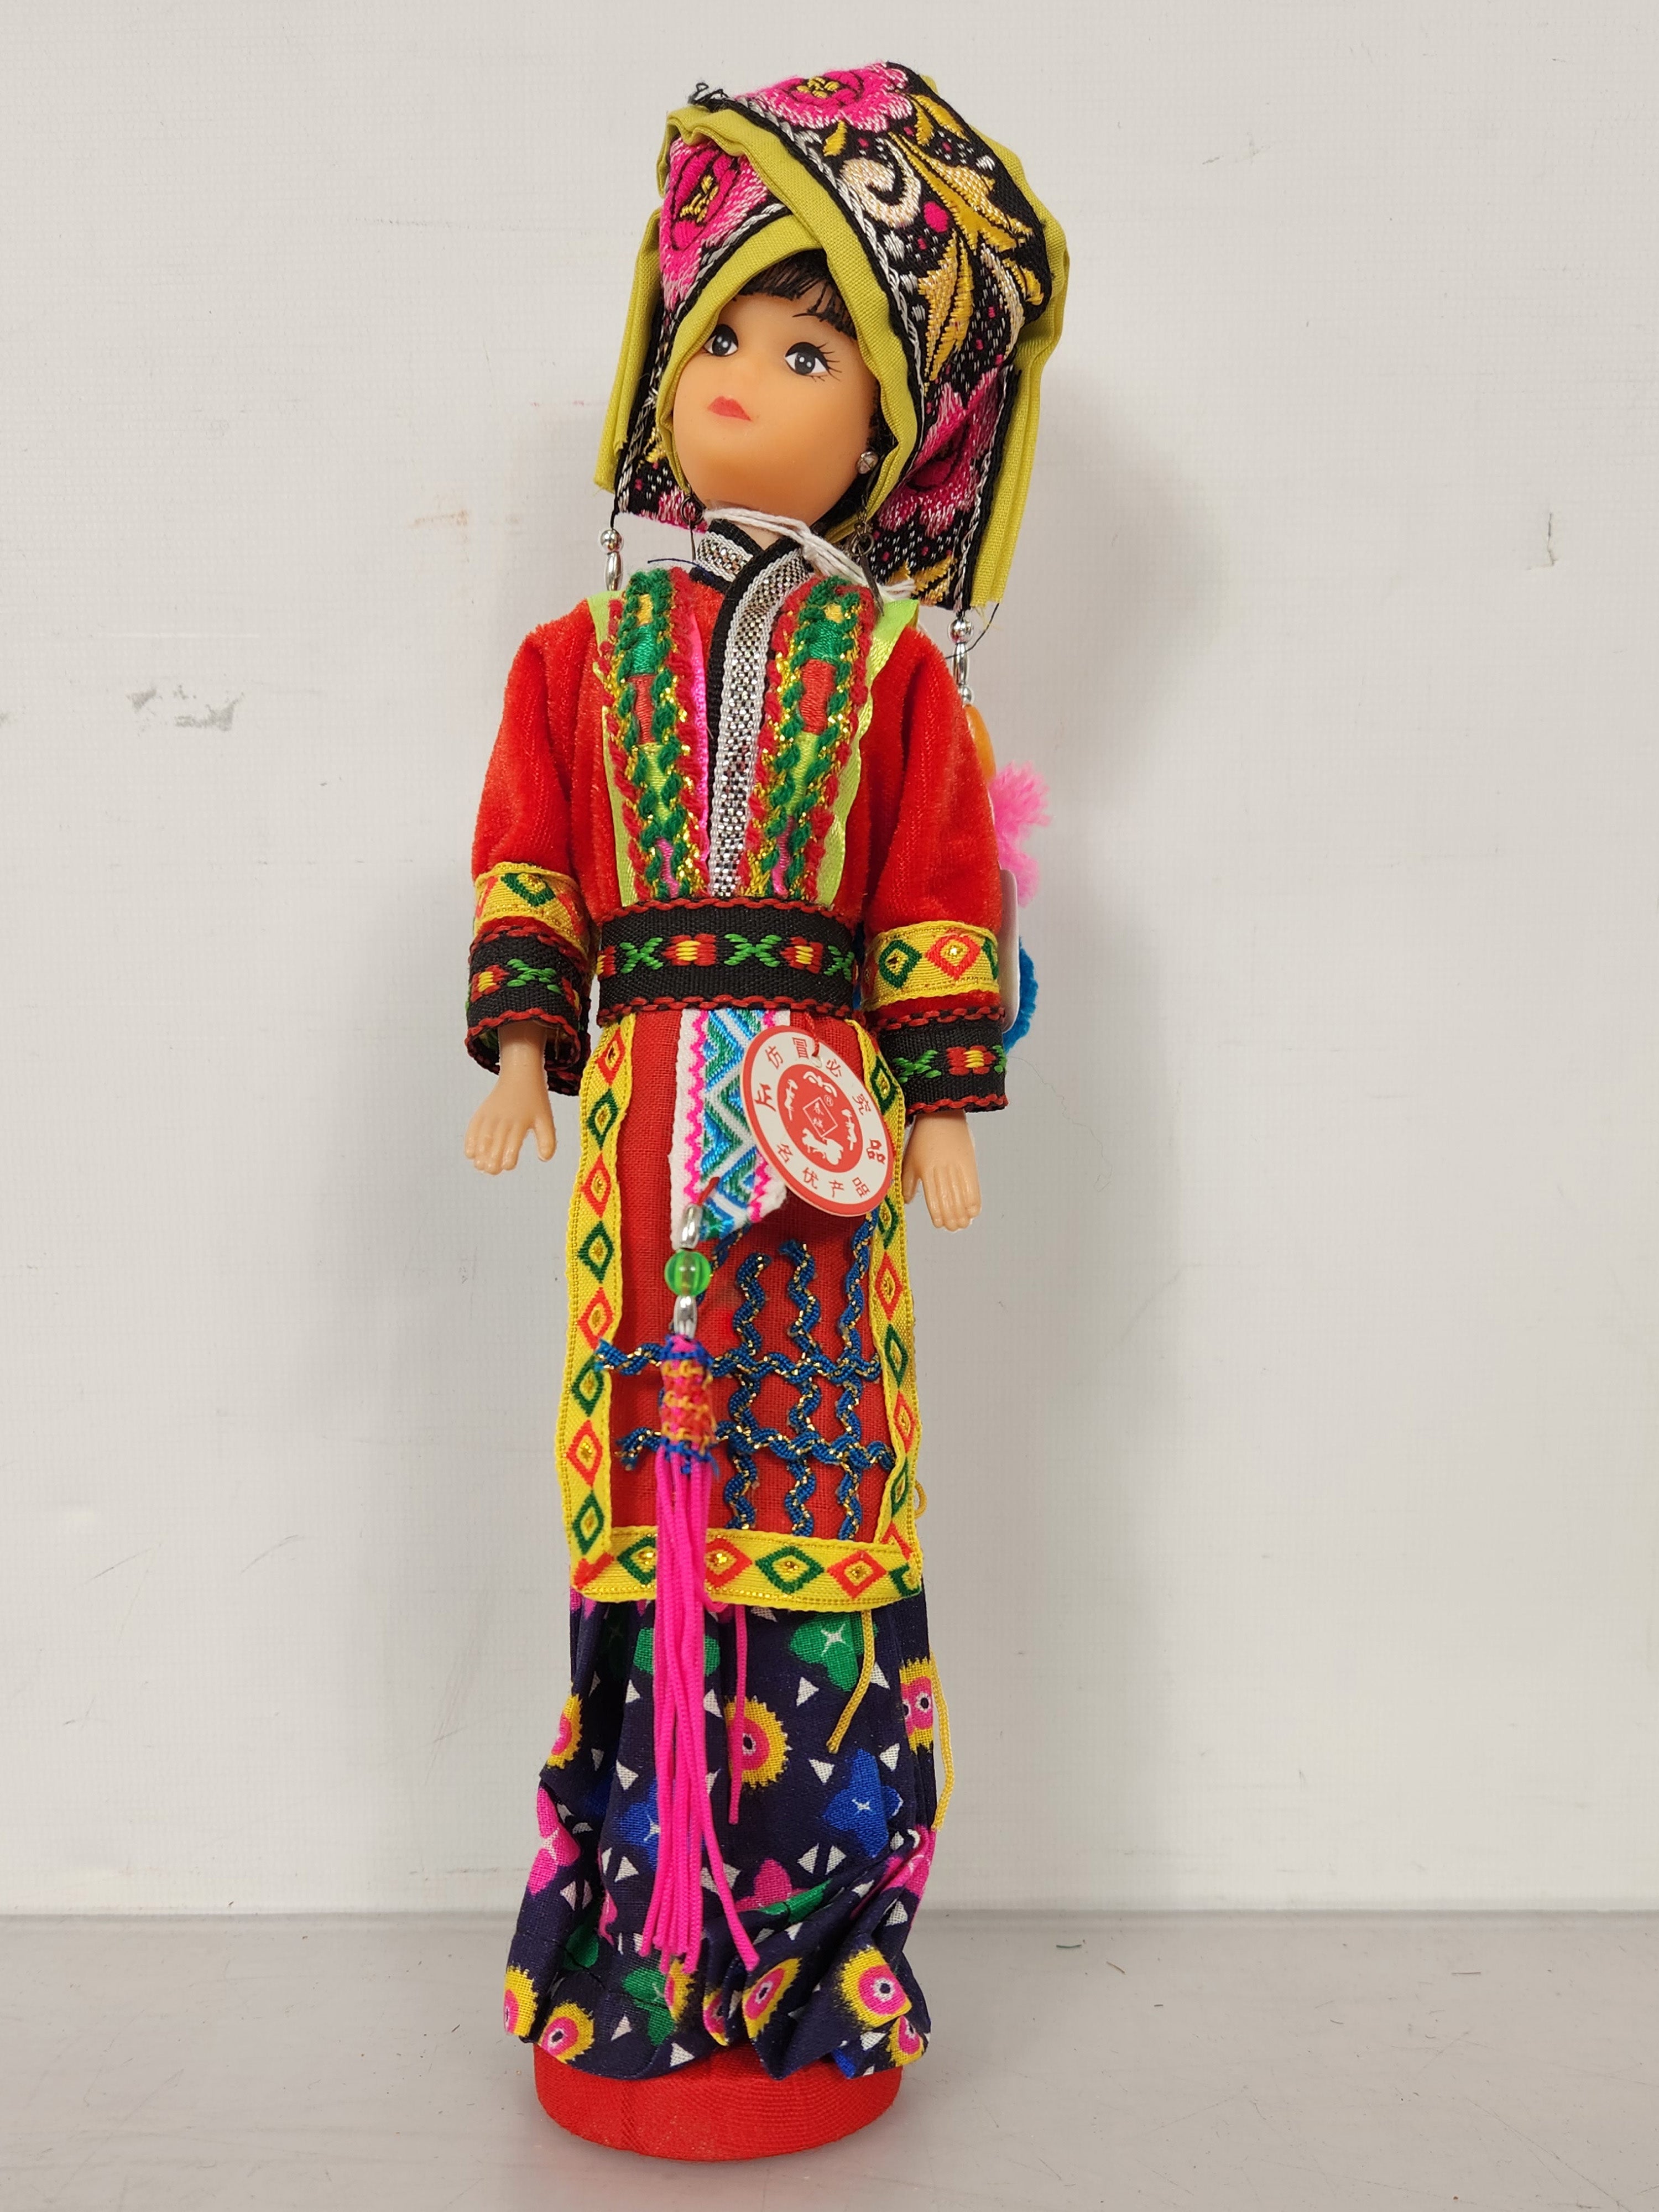 Korean Plastic Doll on Stand